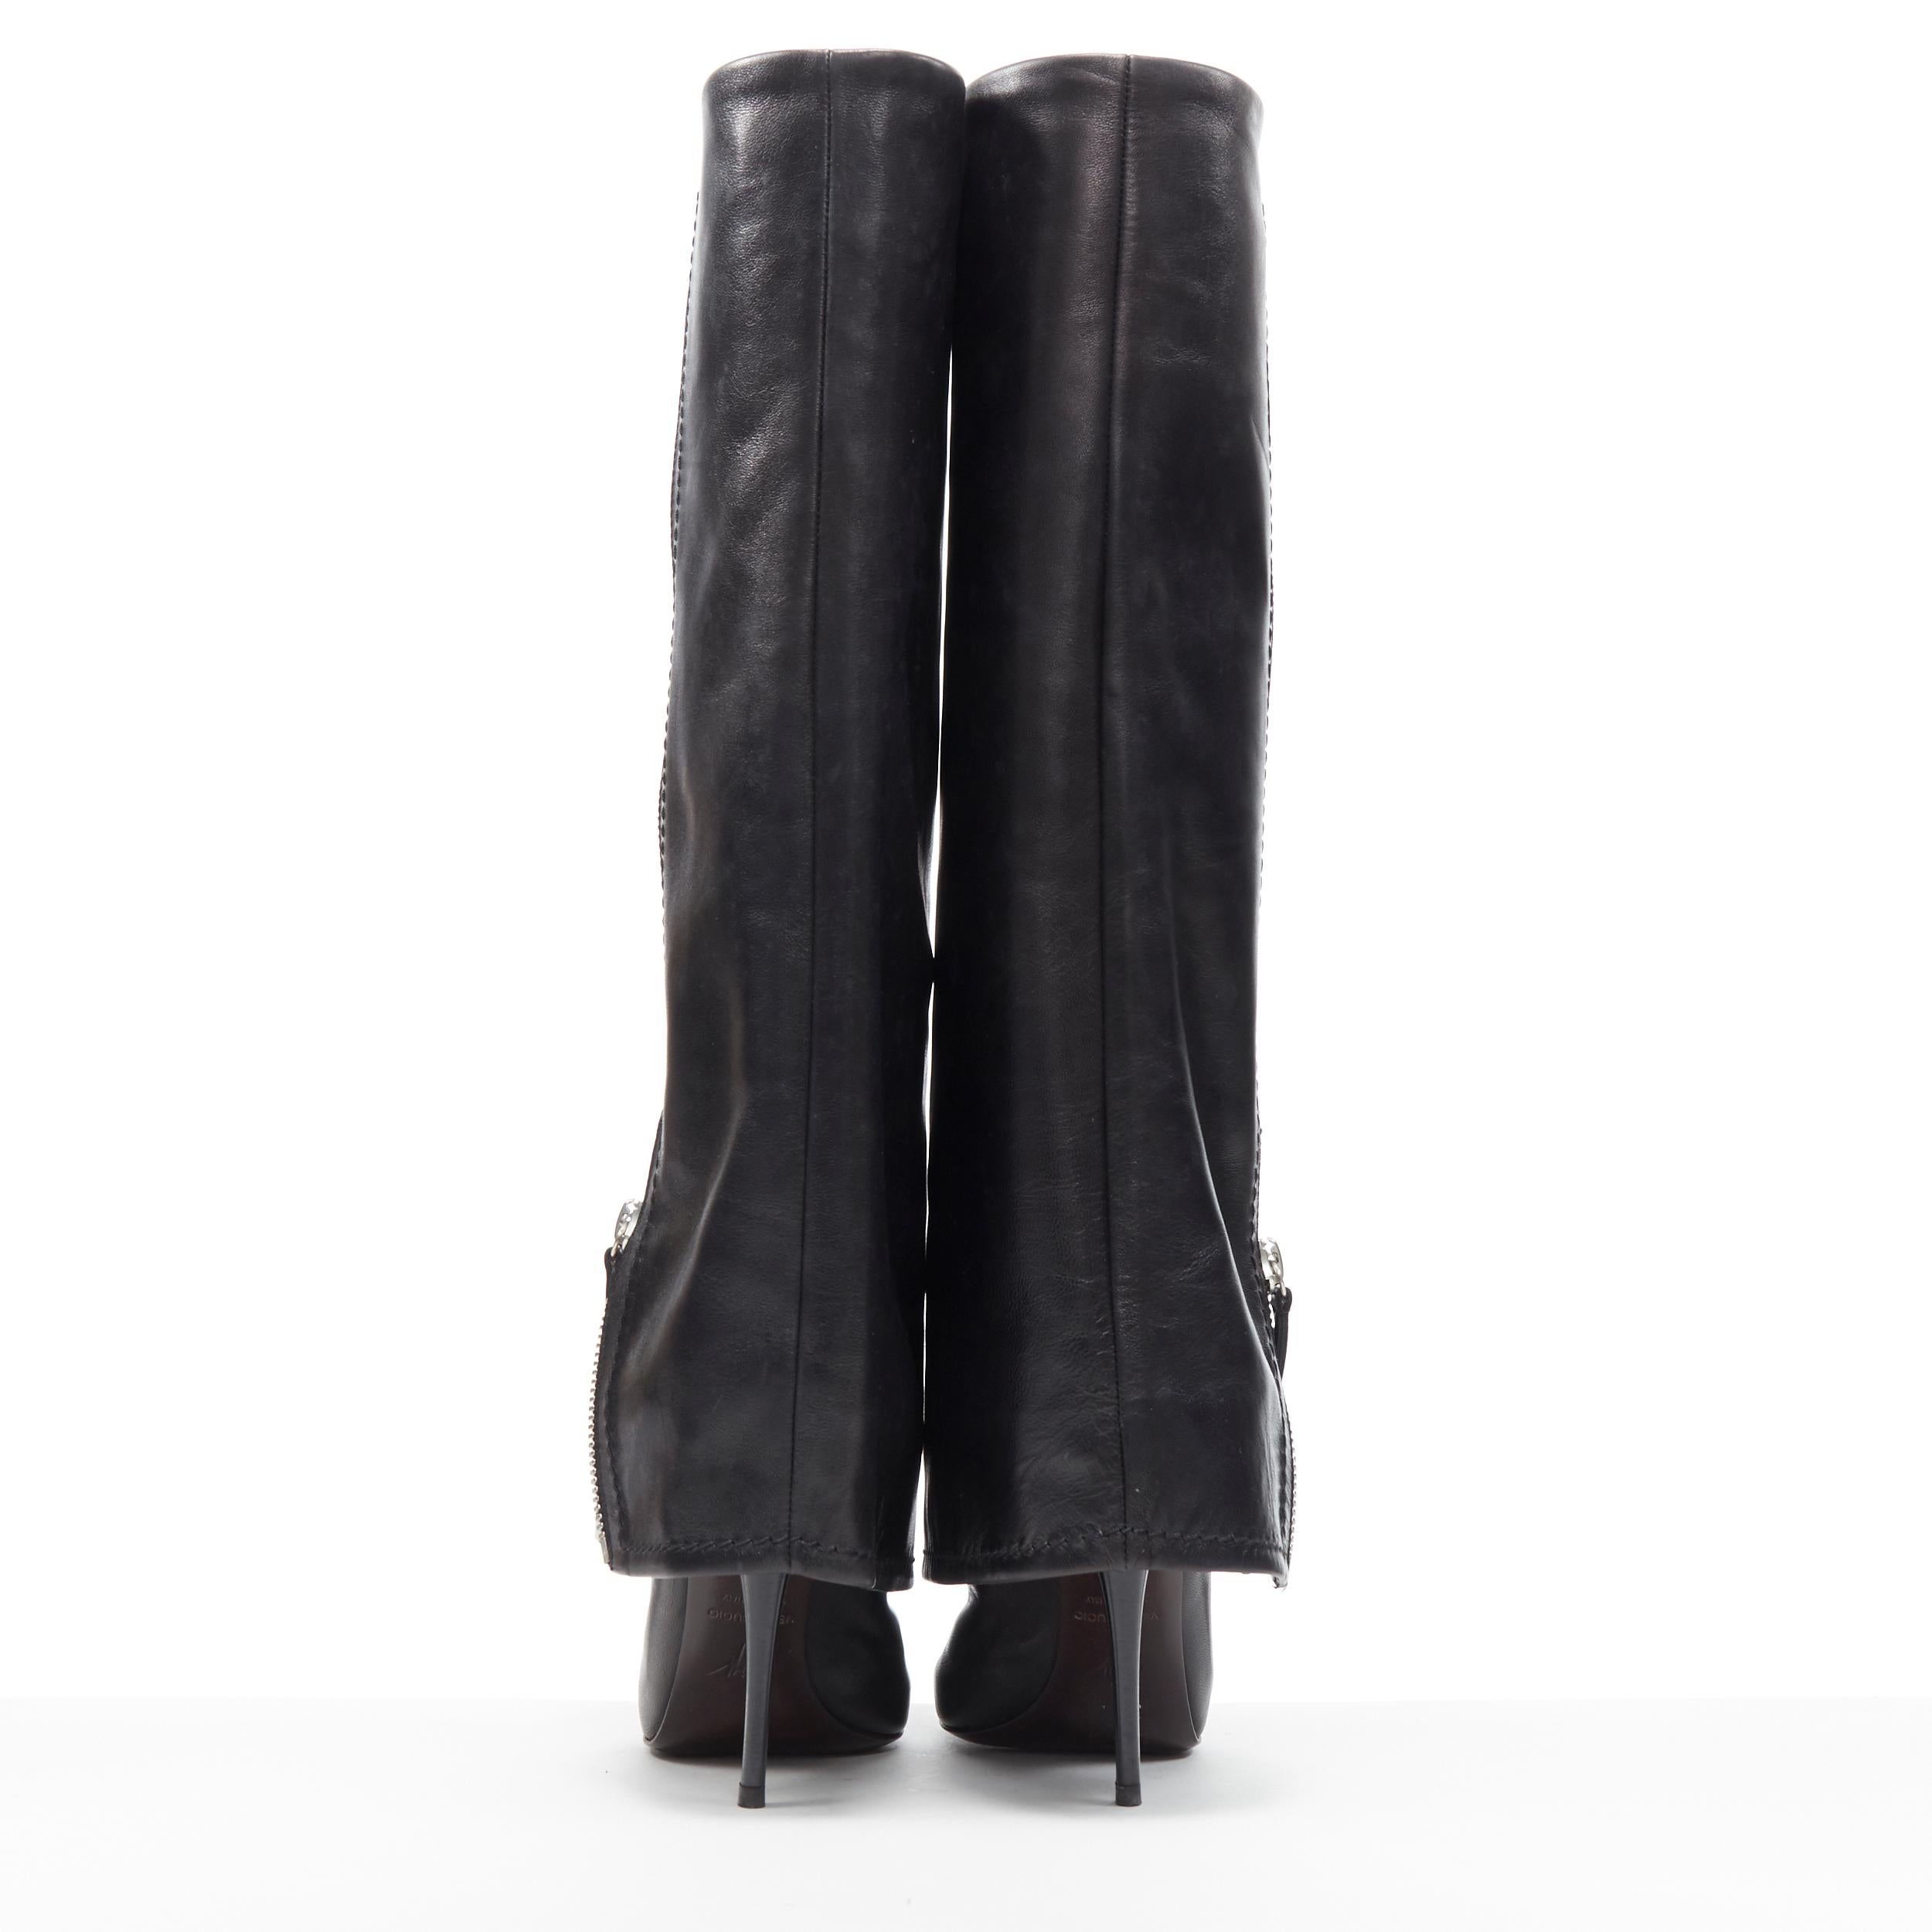 Women's new GIUSEPPE ZANOTTI black leather zipper foldover pant high heel boot EU36